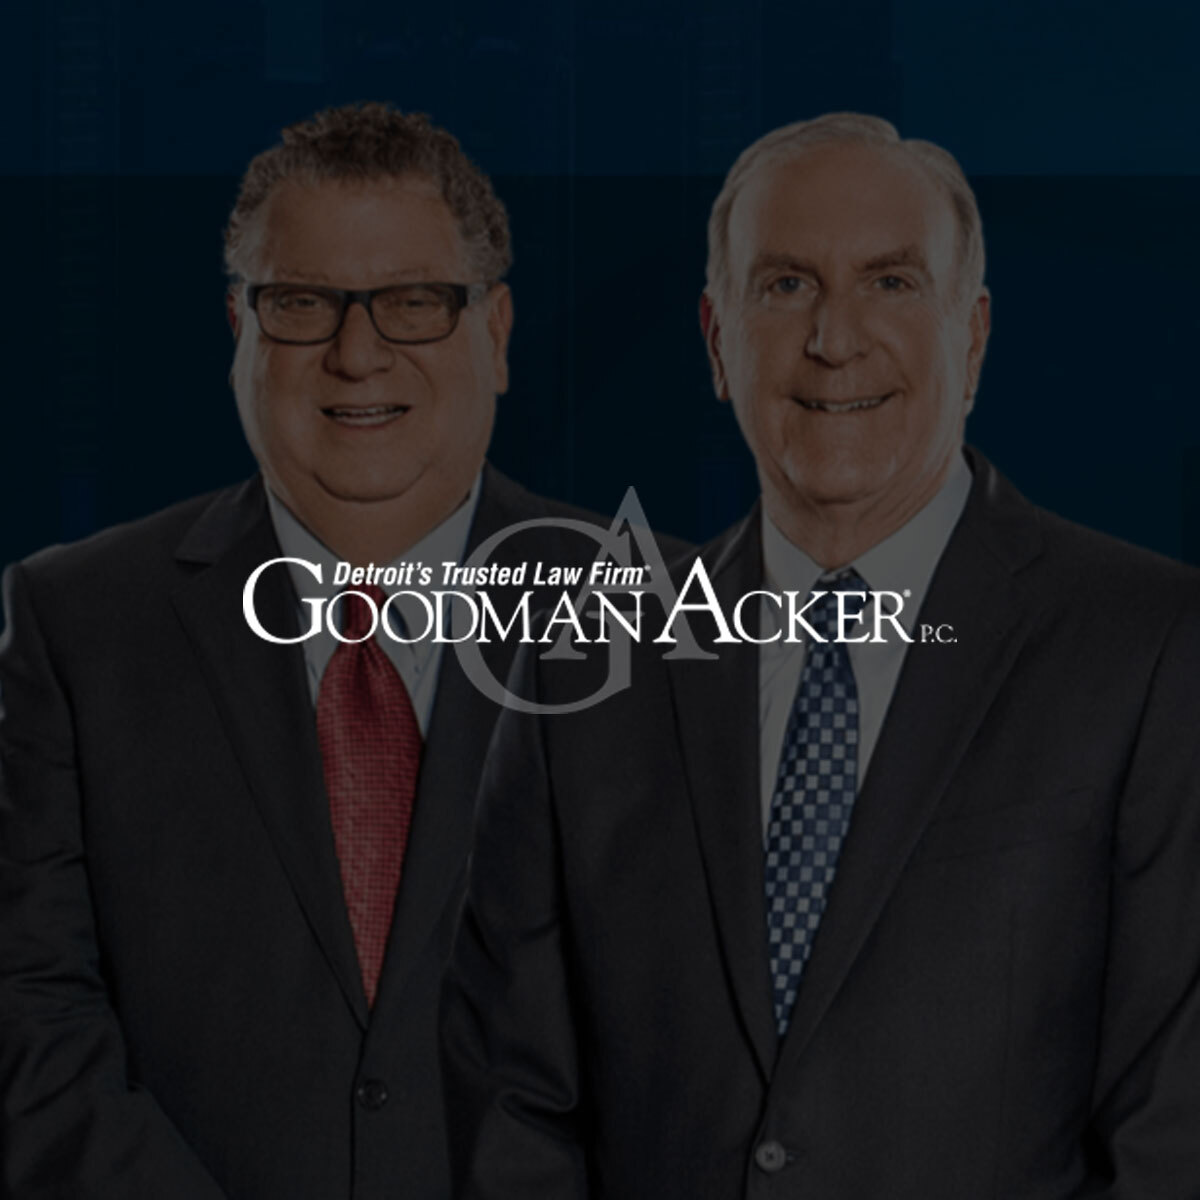 Goodman Acker Website Design for Law Firm | PixelChefs